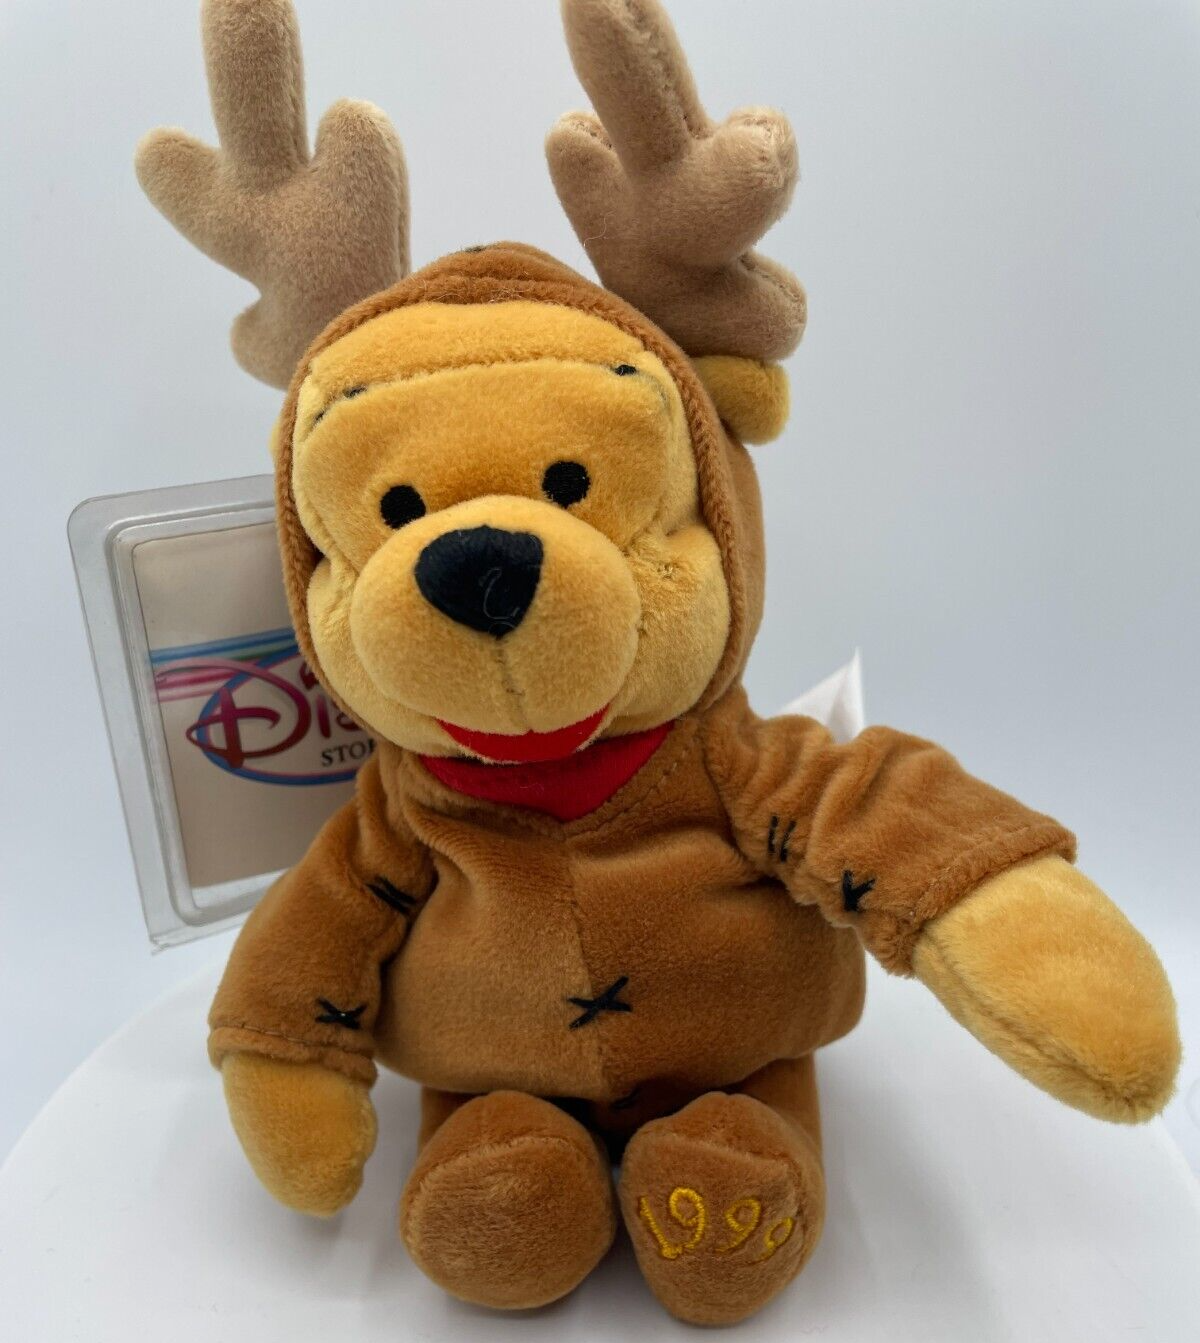 Winnie The Pooh Disney Store Mini Bean Bag Reindeer Plush with Tag 1999 - £3.02 GBP